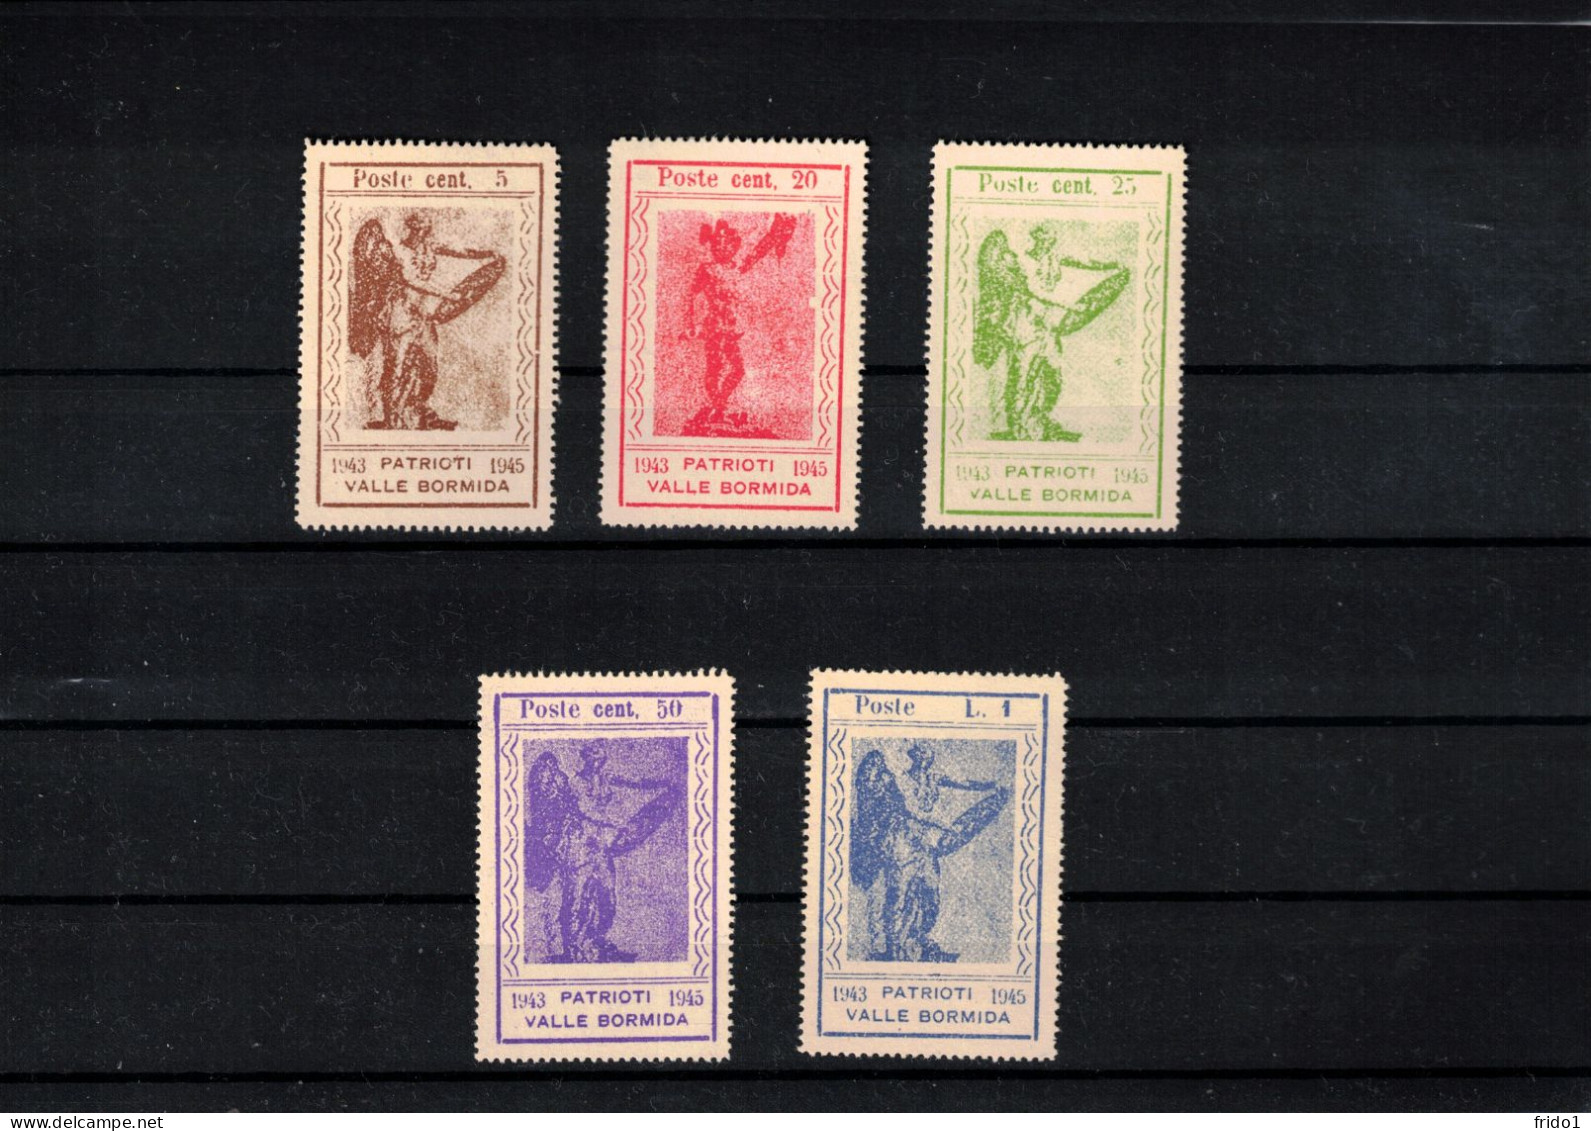 Italy / Italia 1945 Regno D'Italia Valle Bormida Part Of Set Stamps Without Gum As Issued - Ongebruikt